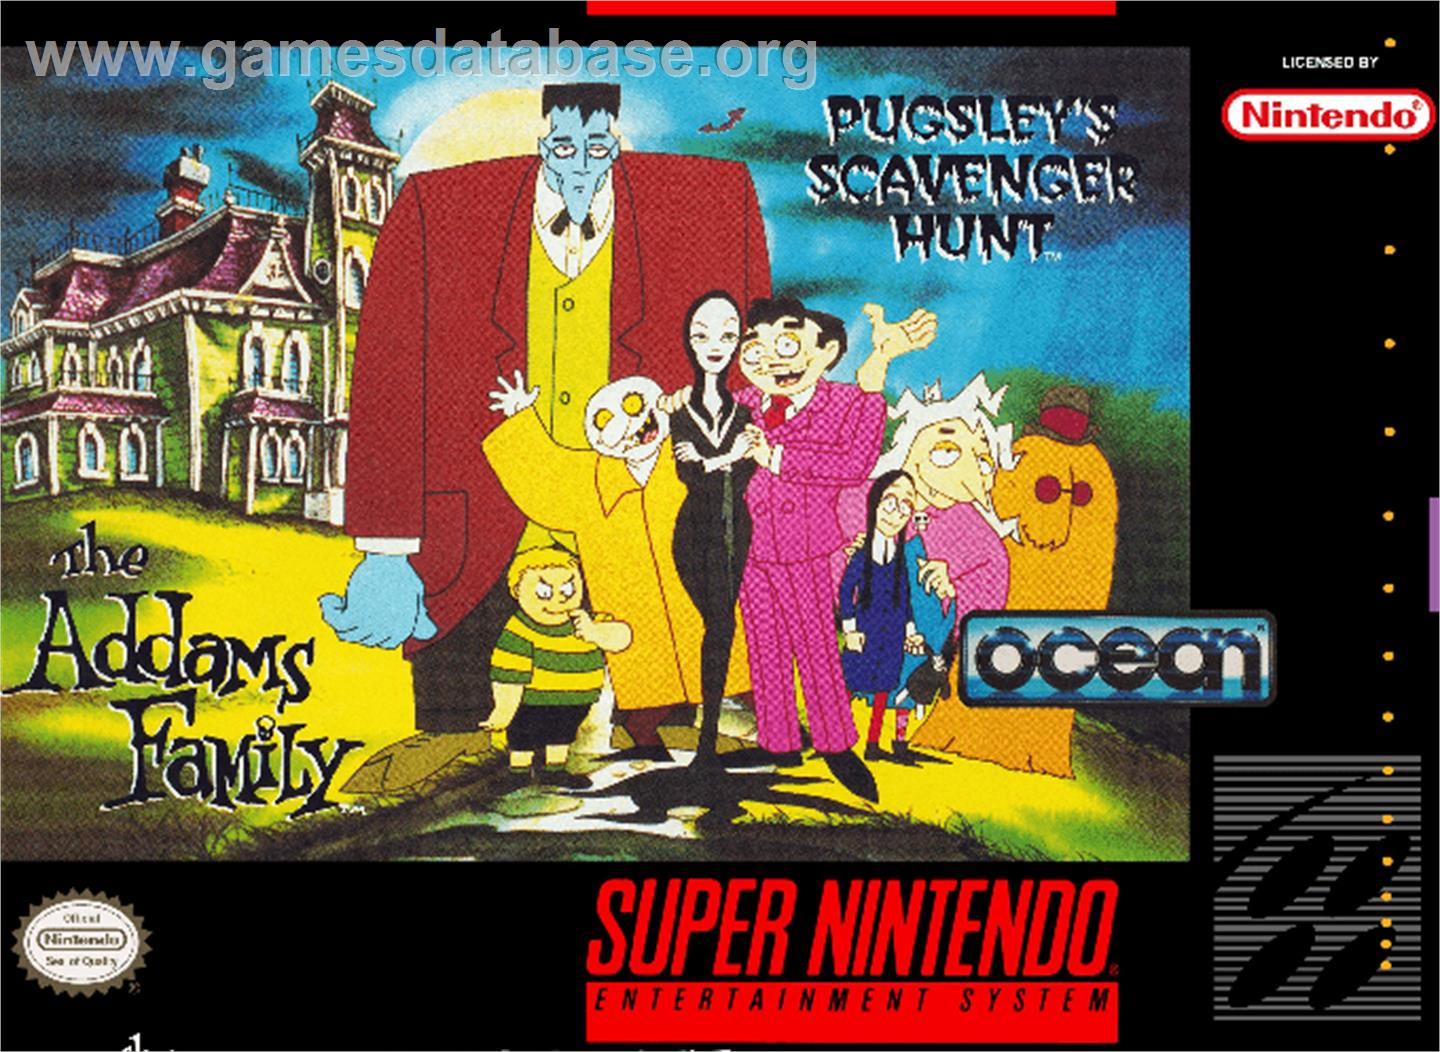 The Addams Family: Pugsley's Scavenger Hunt - Nintendo SNES - Artwork - Box